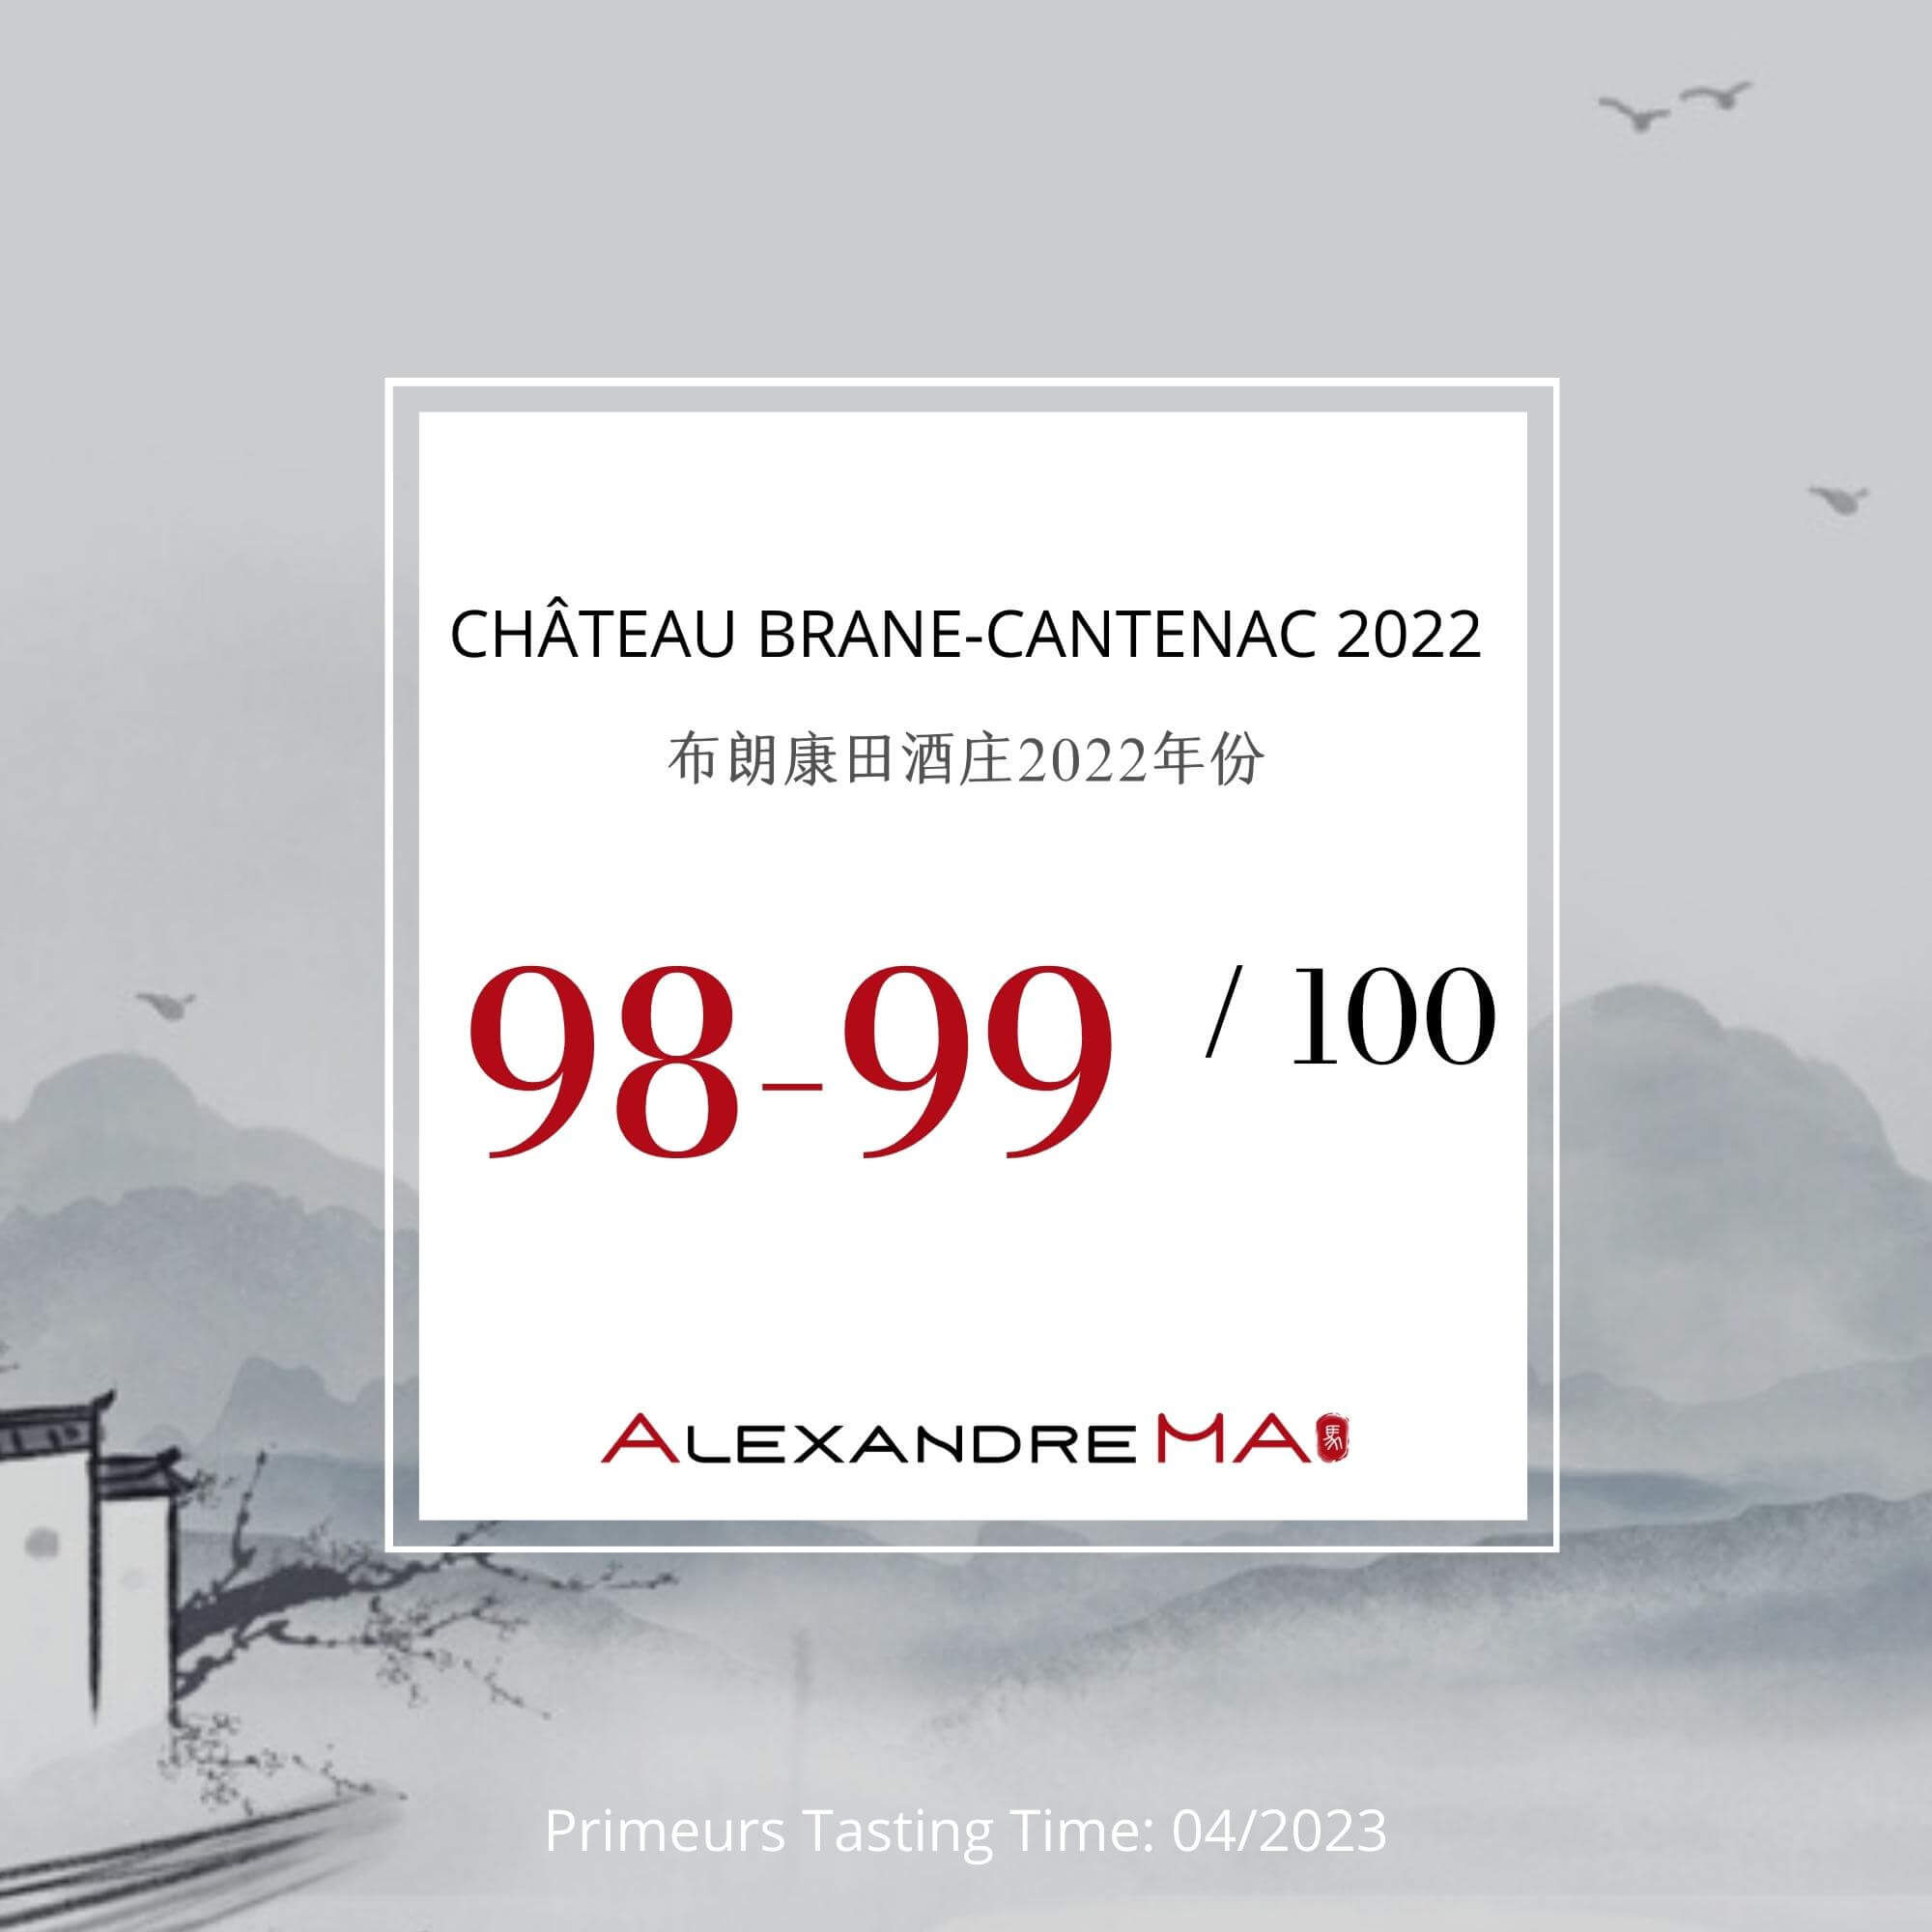 Château Brane-Cantenac 2022 Primeurs - Alexandre MA